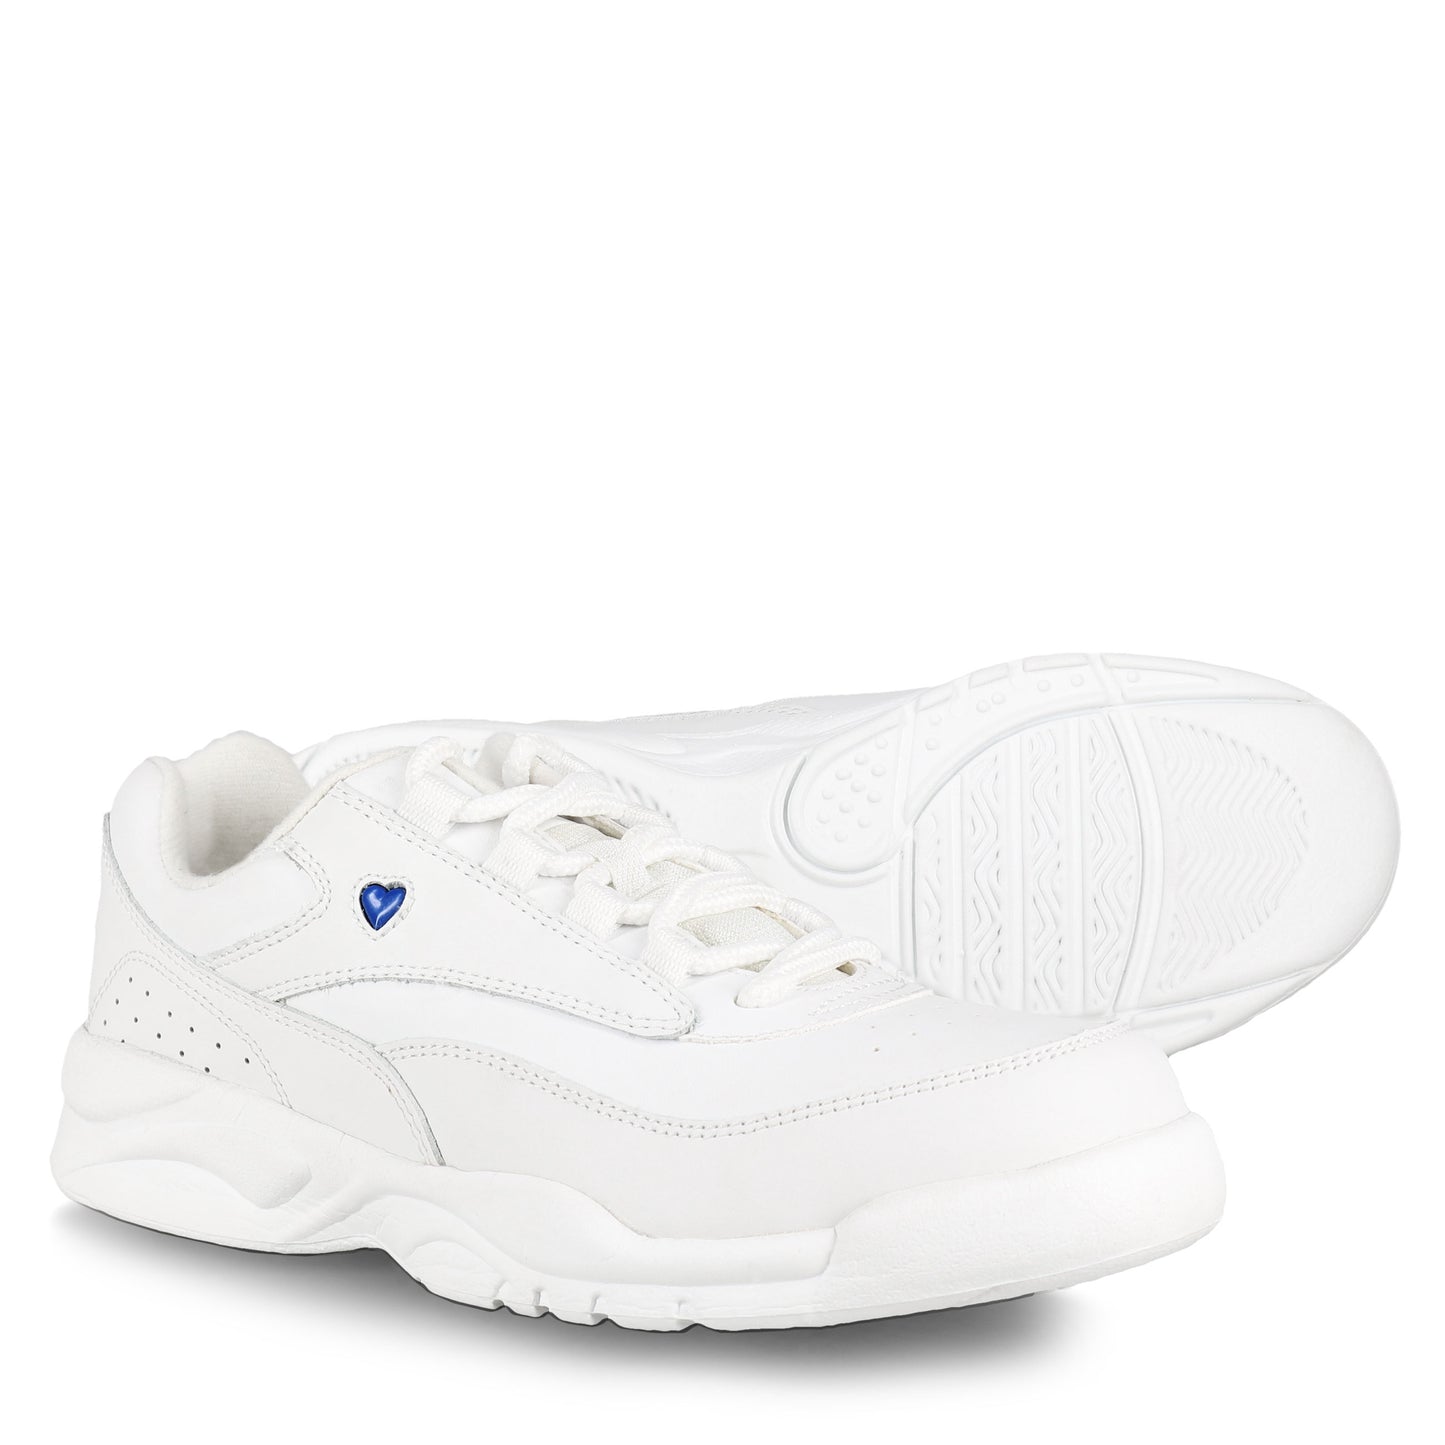 Nursemates Elect2 White Shoes